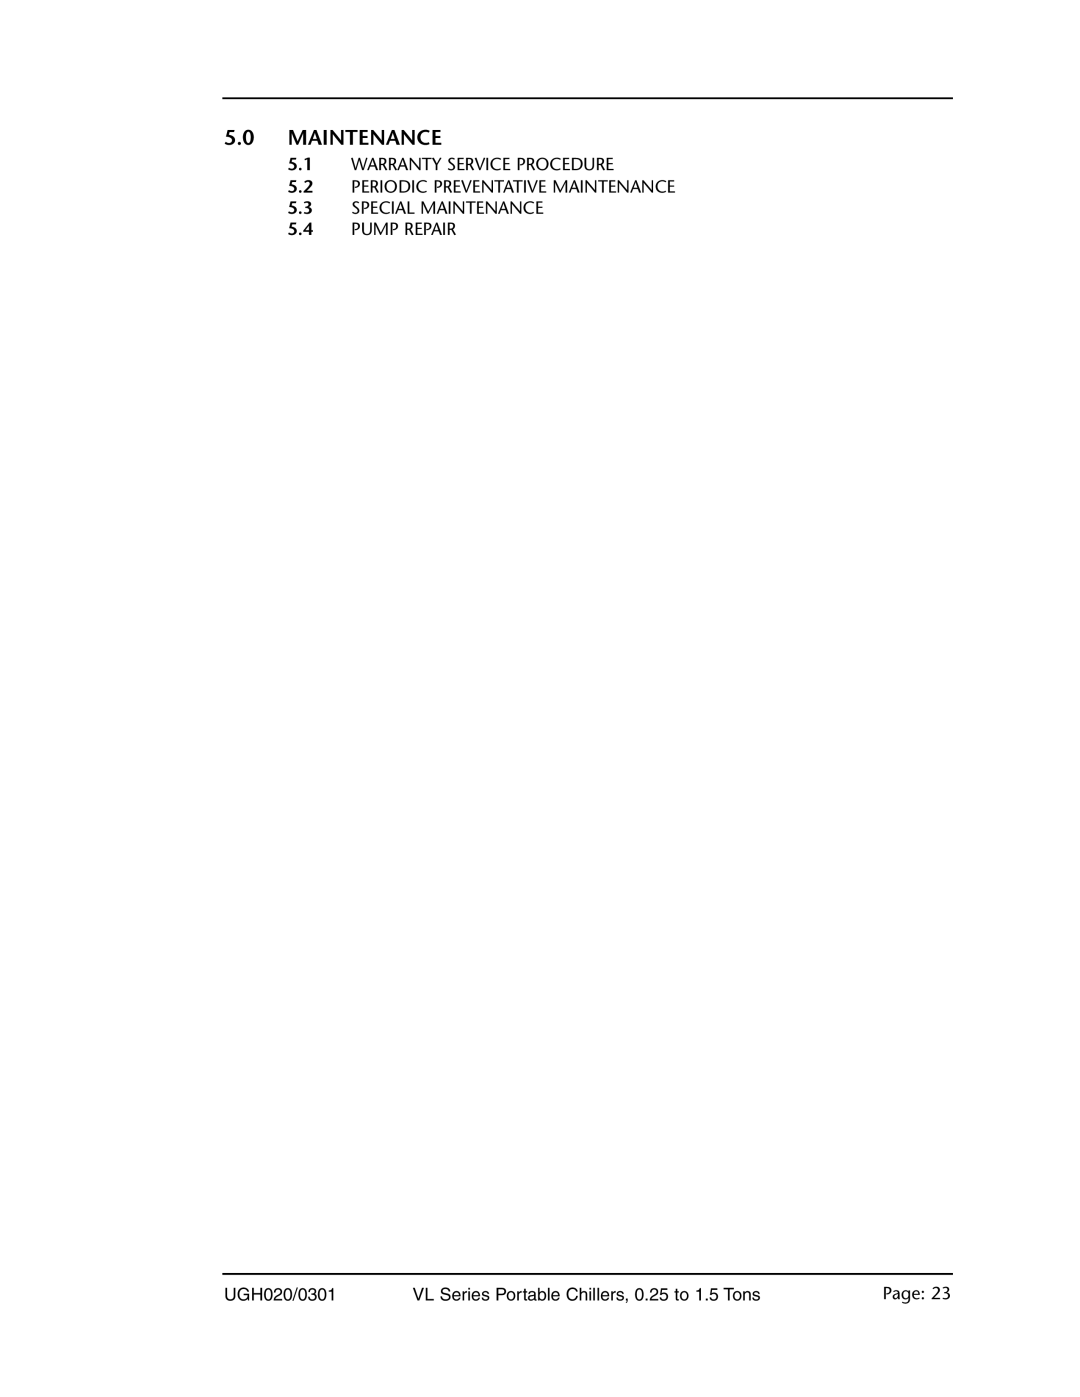 Conair VL Series manual 5.0MAINTENANCE, 5.1WARRANTY SERVICE PROCEDURE, 5.2PERIODIC PREVENTATIVE MAINTENANCE, Page 